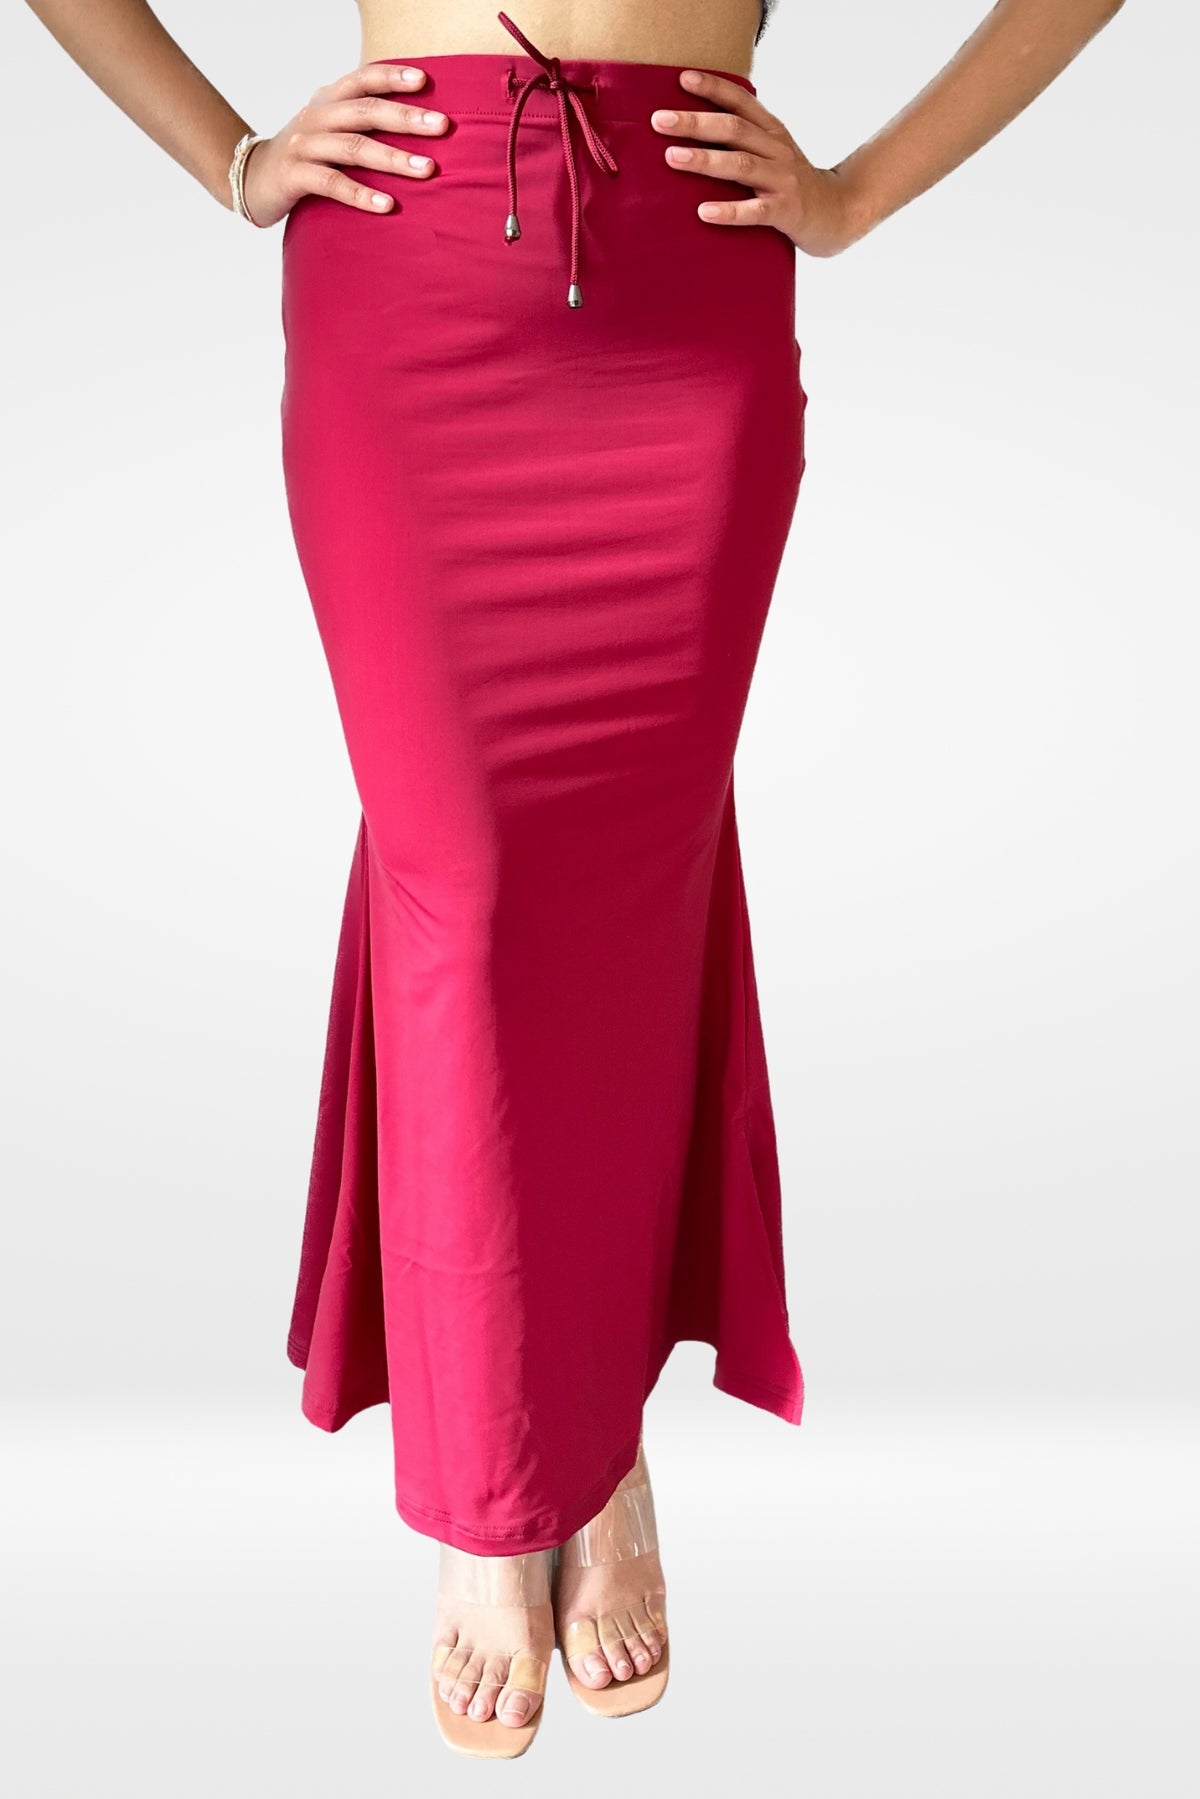 IMTRA FASHION Straight Fit Petticoat for Women Cotton Lycra Saree